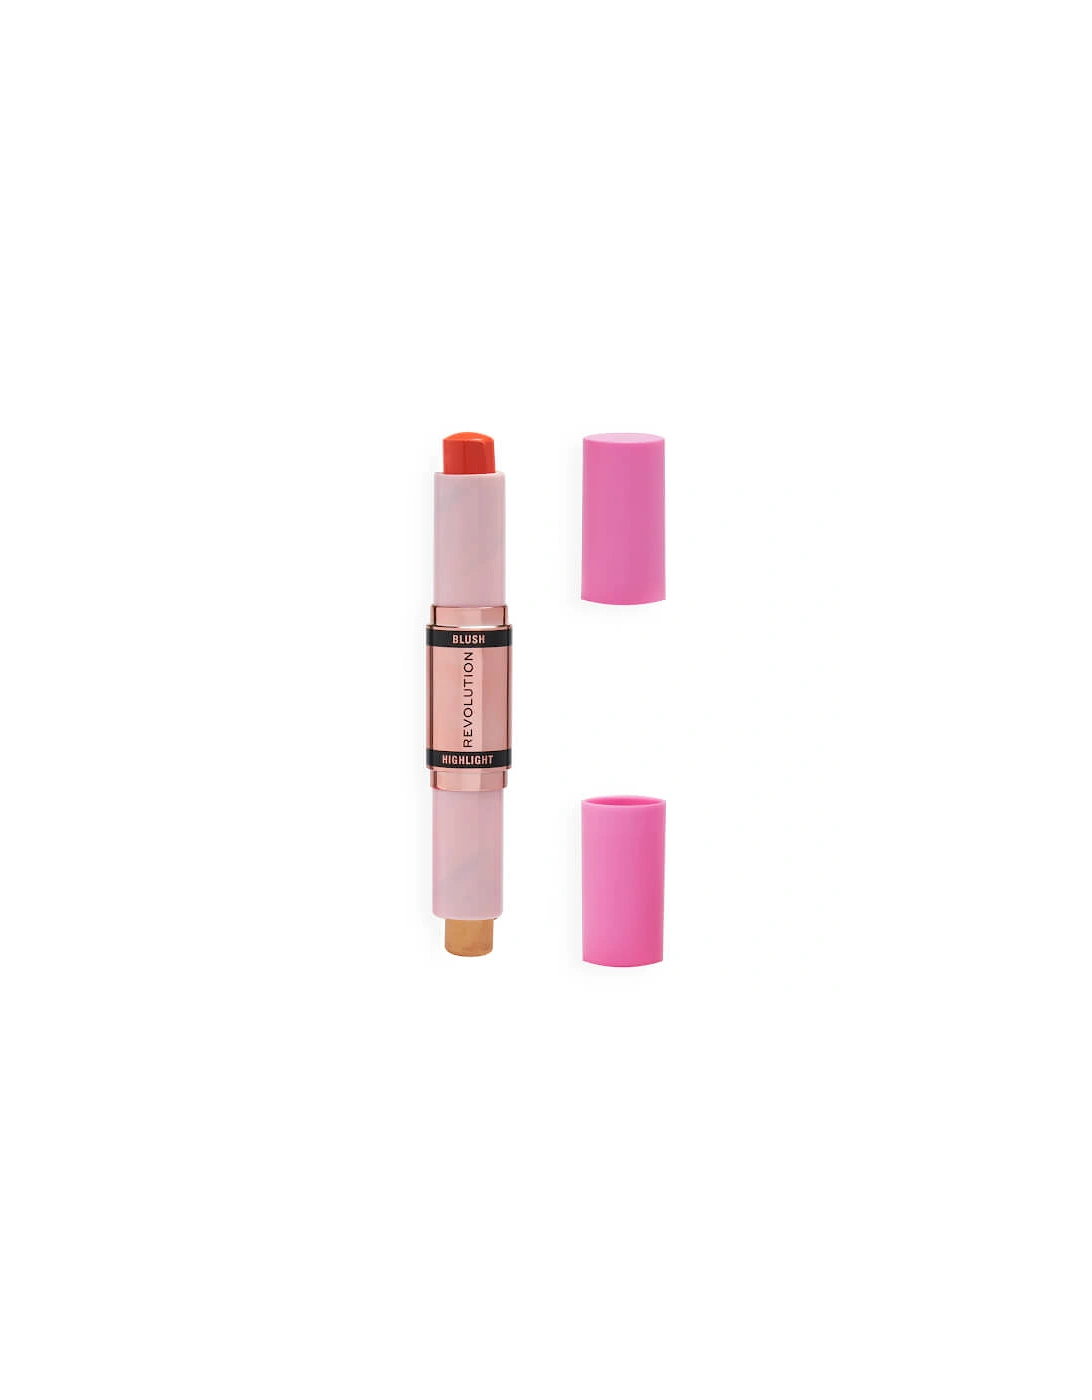 Makeup Blush & Highlight Stick - Coral Dew, 2 of 1